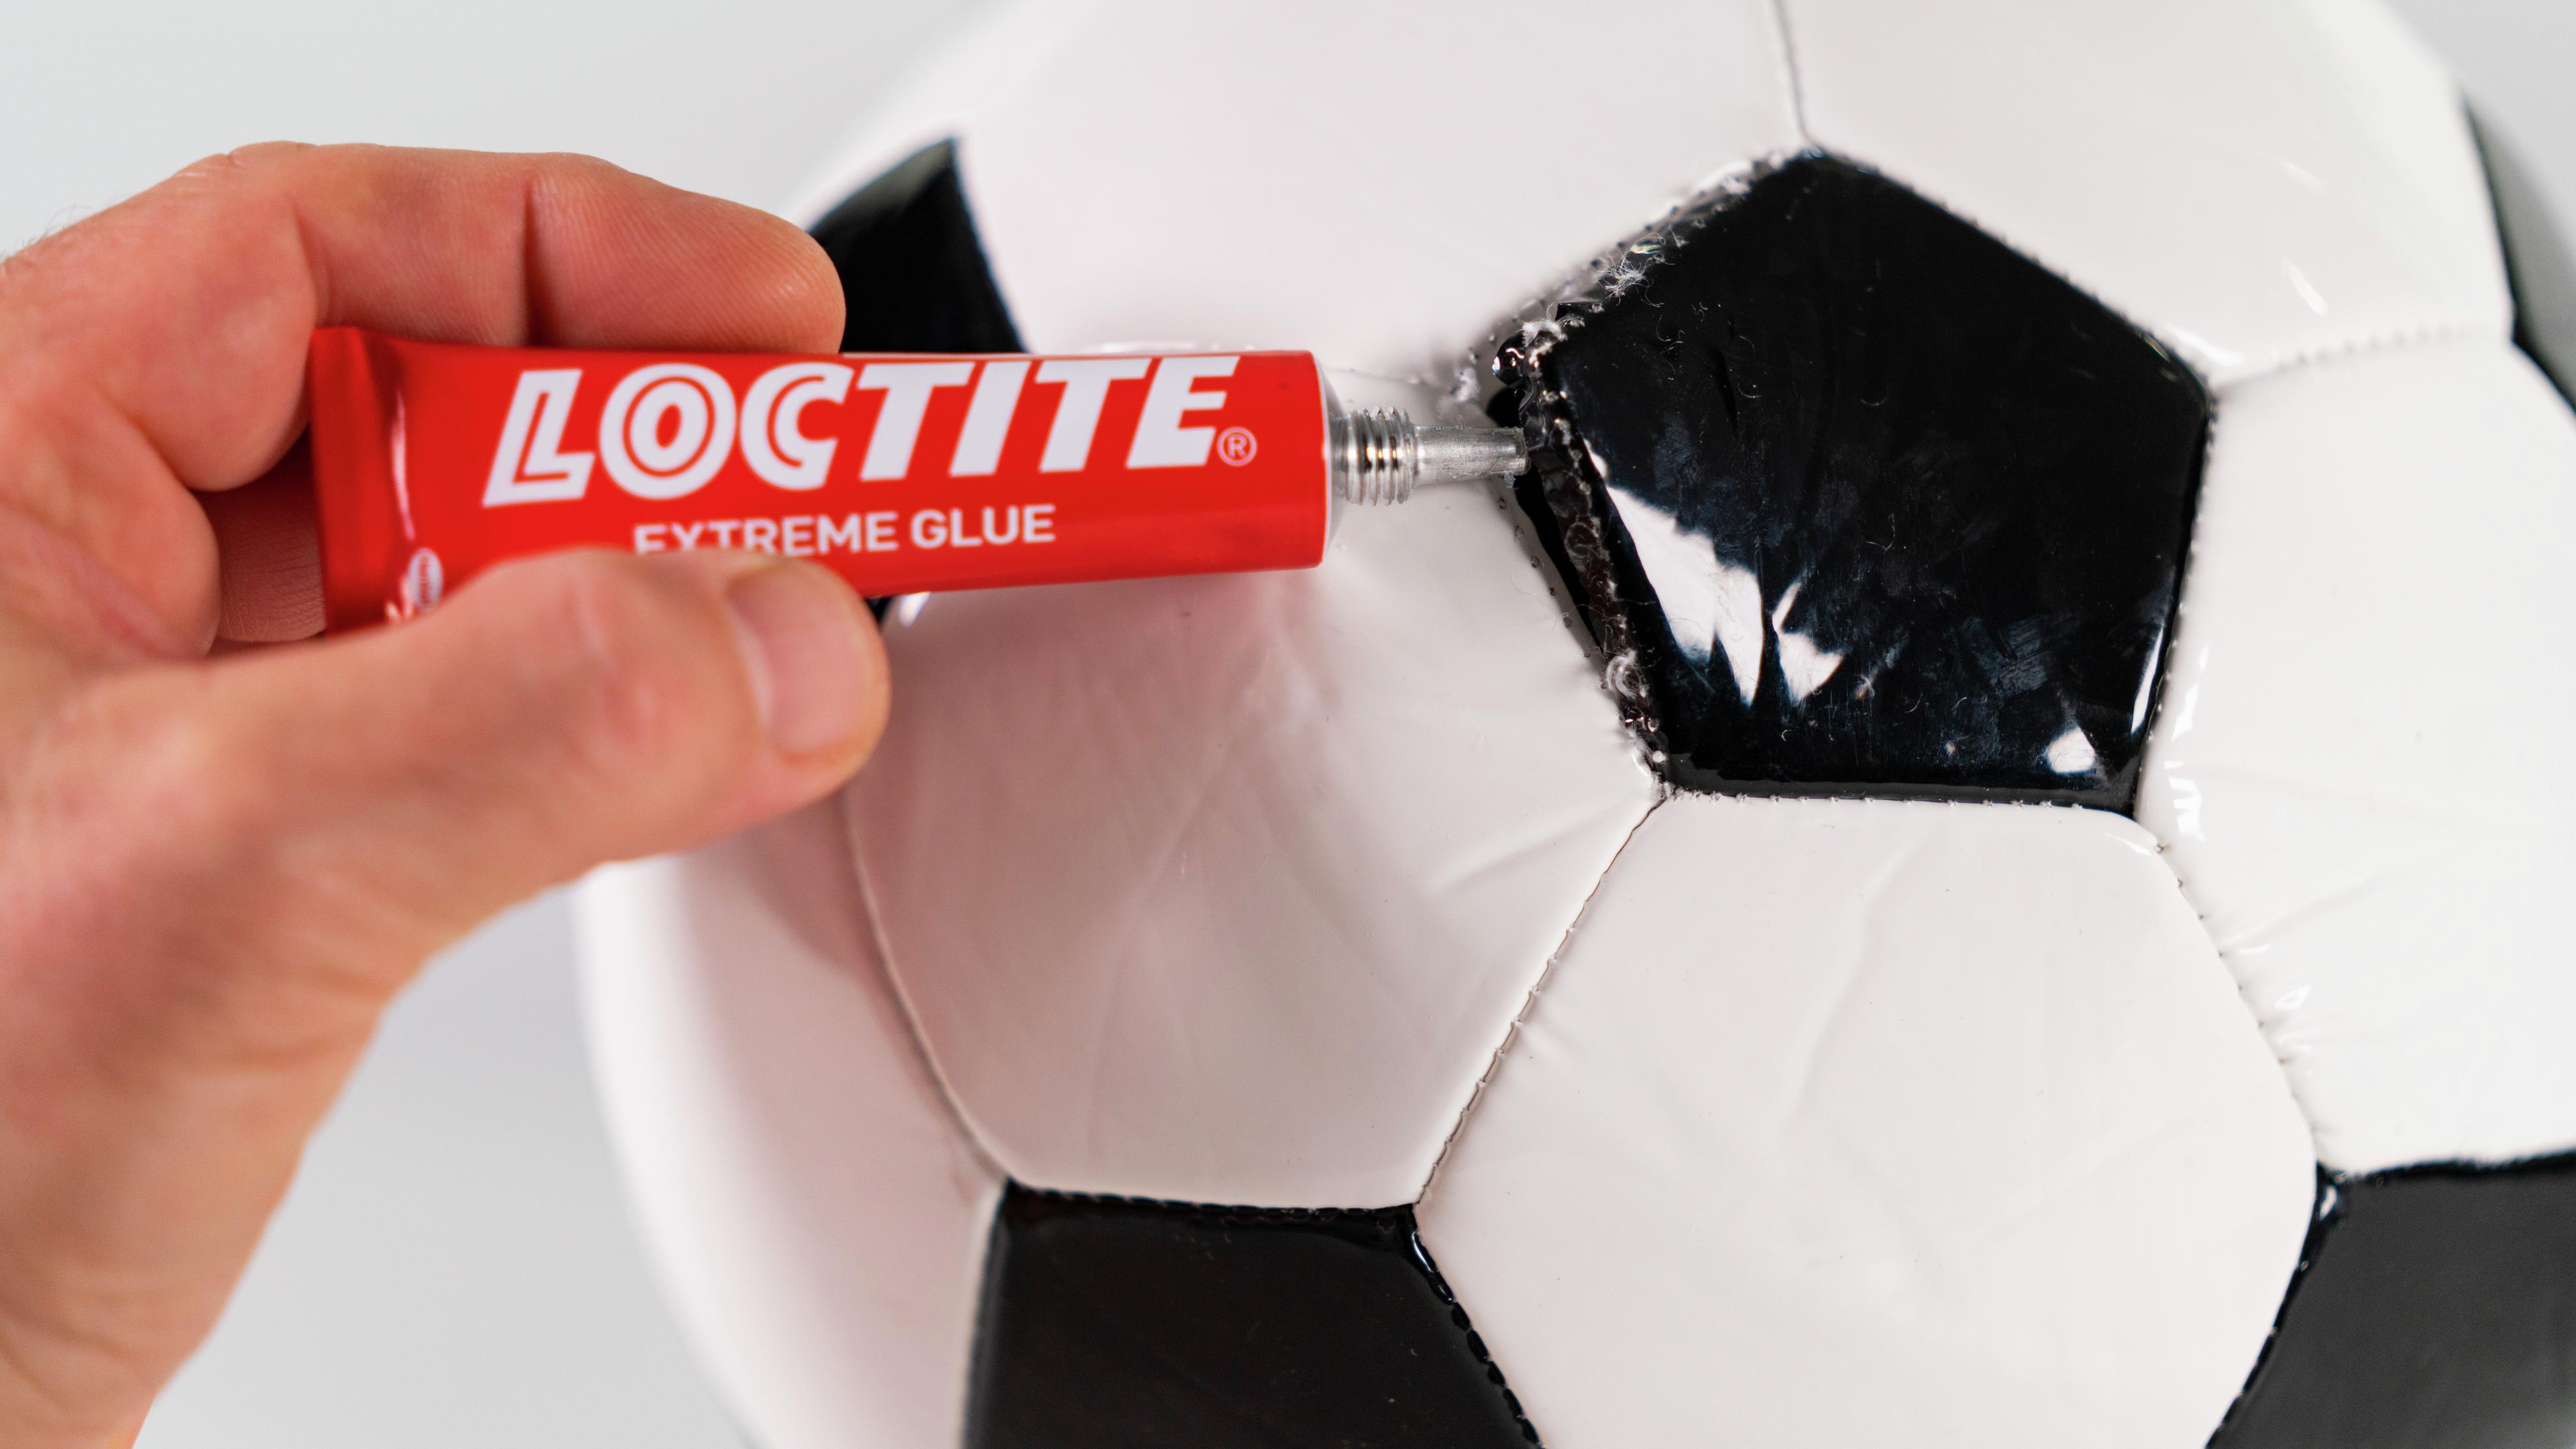 Loctite Vinyl, Fabric & Plastic Flexible Adhesive Waterproof Glue 1 Fl. Oz  30ml -  Australia